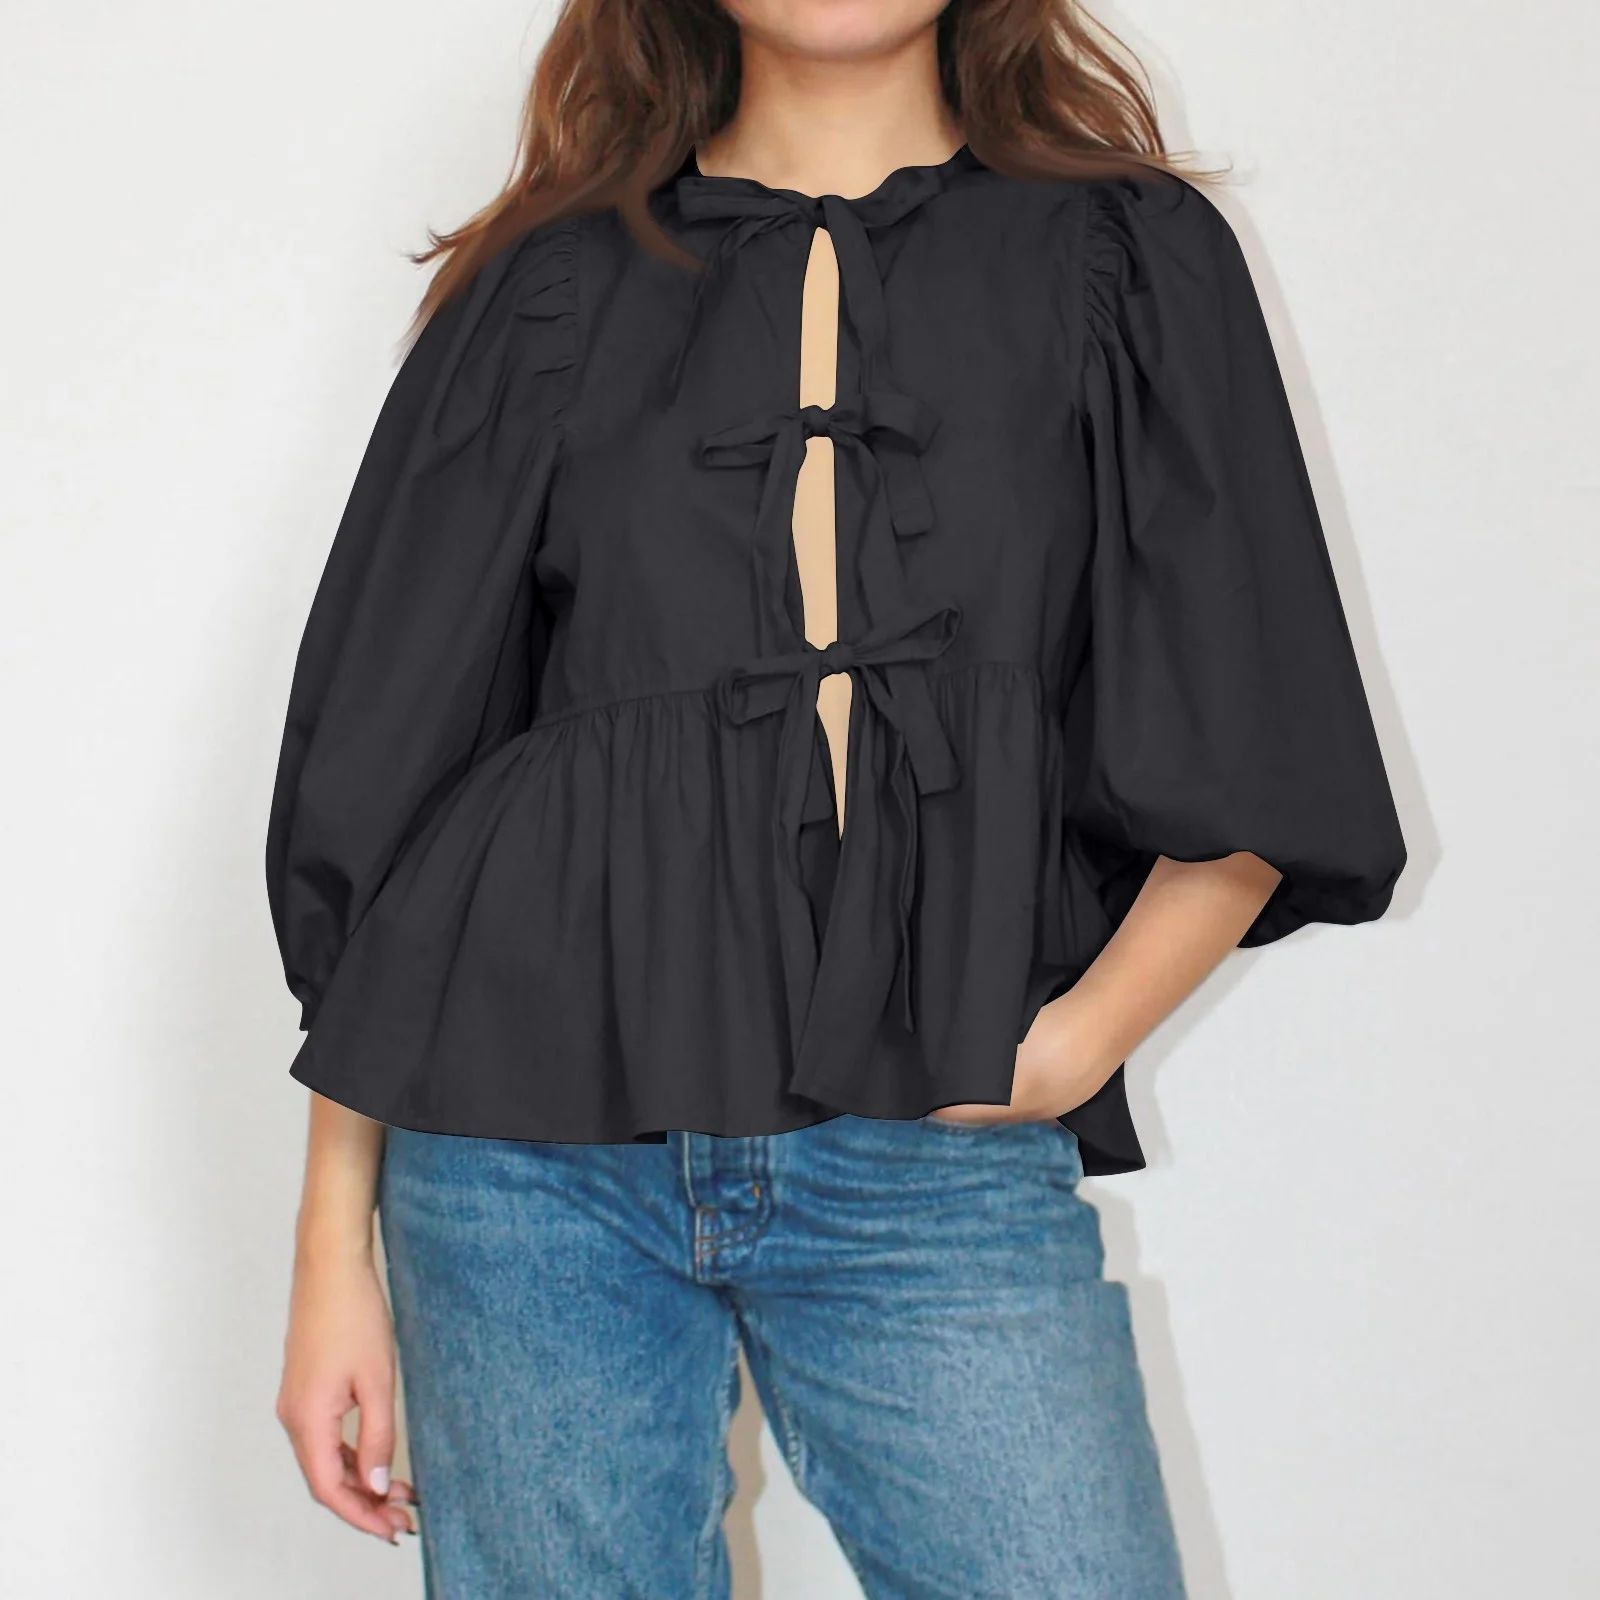 LTTVQM Women Tie Front Tops Puff Sleeve Babydoll Shirts Y2K Cute Ruffle Peplum Going Out Top Blou... | Walmart (US)